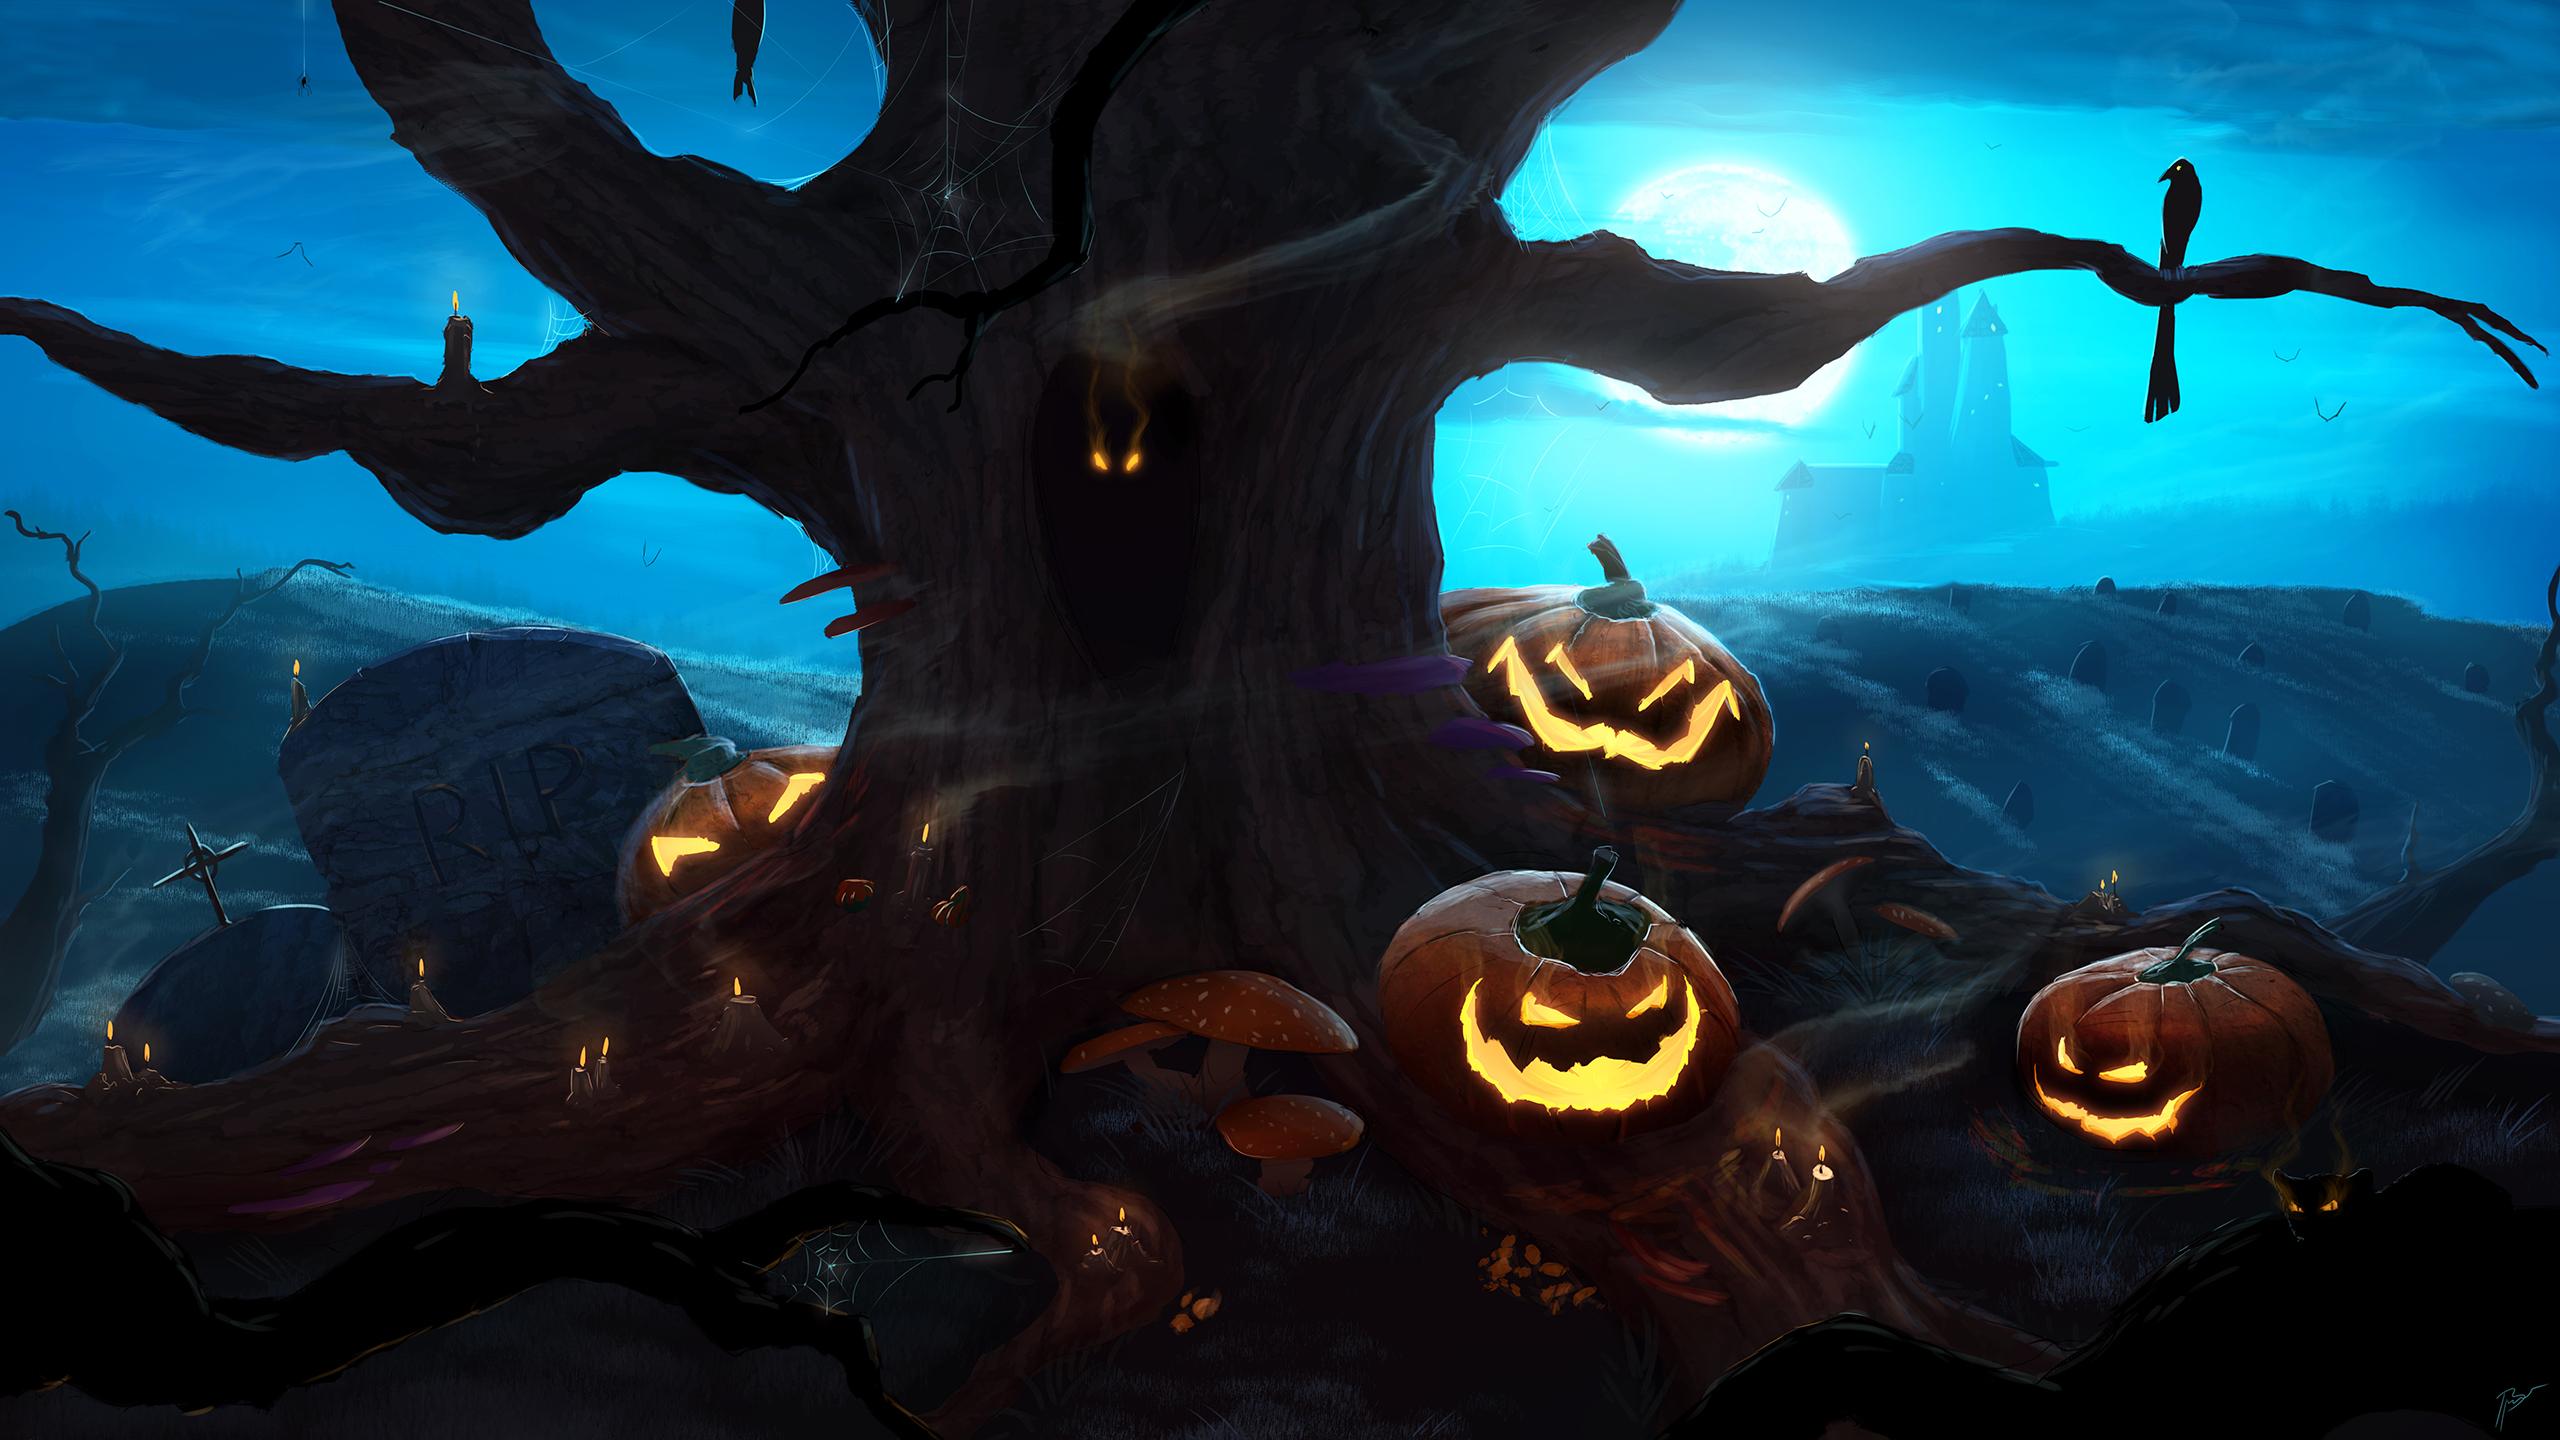 Halloween Digital Art Wallpapers Top Free Halloween Digital Art